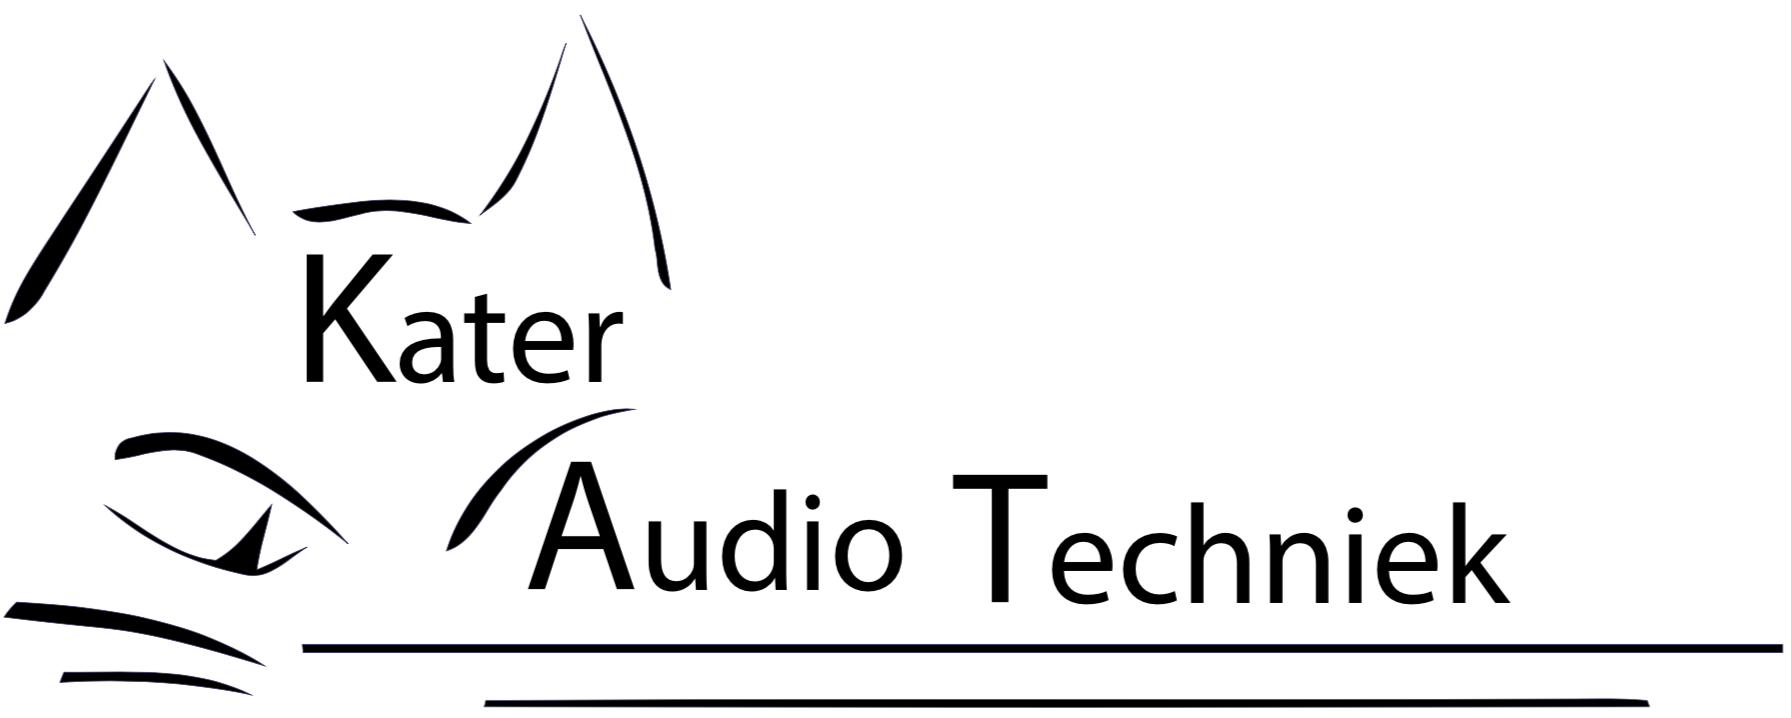 Kater Audio Techniek